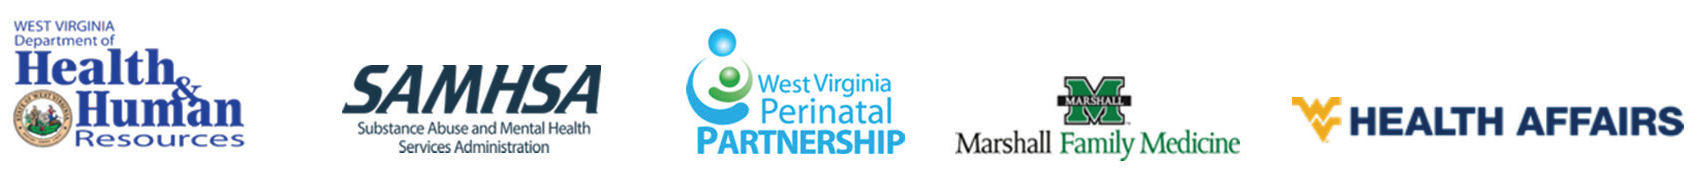 Logos for WVDHHR, SAMHSA, WV Perinatal Partnership, Marshall Family Medicine, and WV Health Affairs